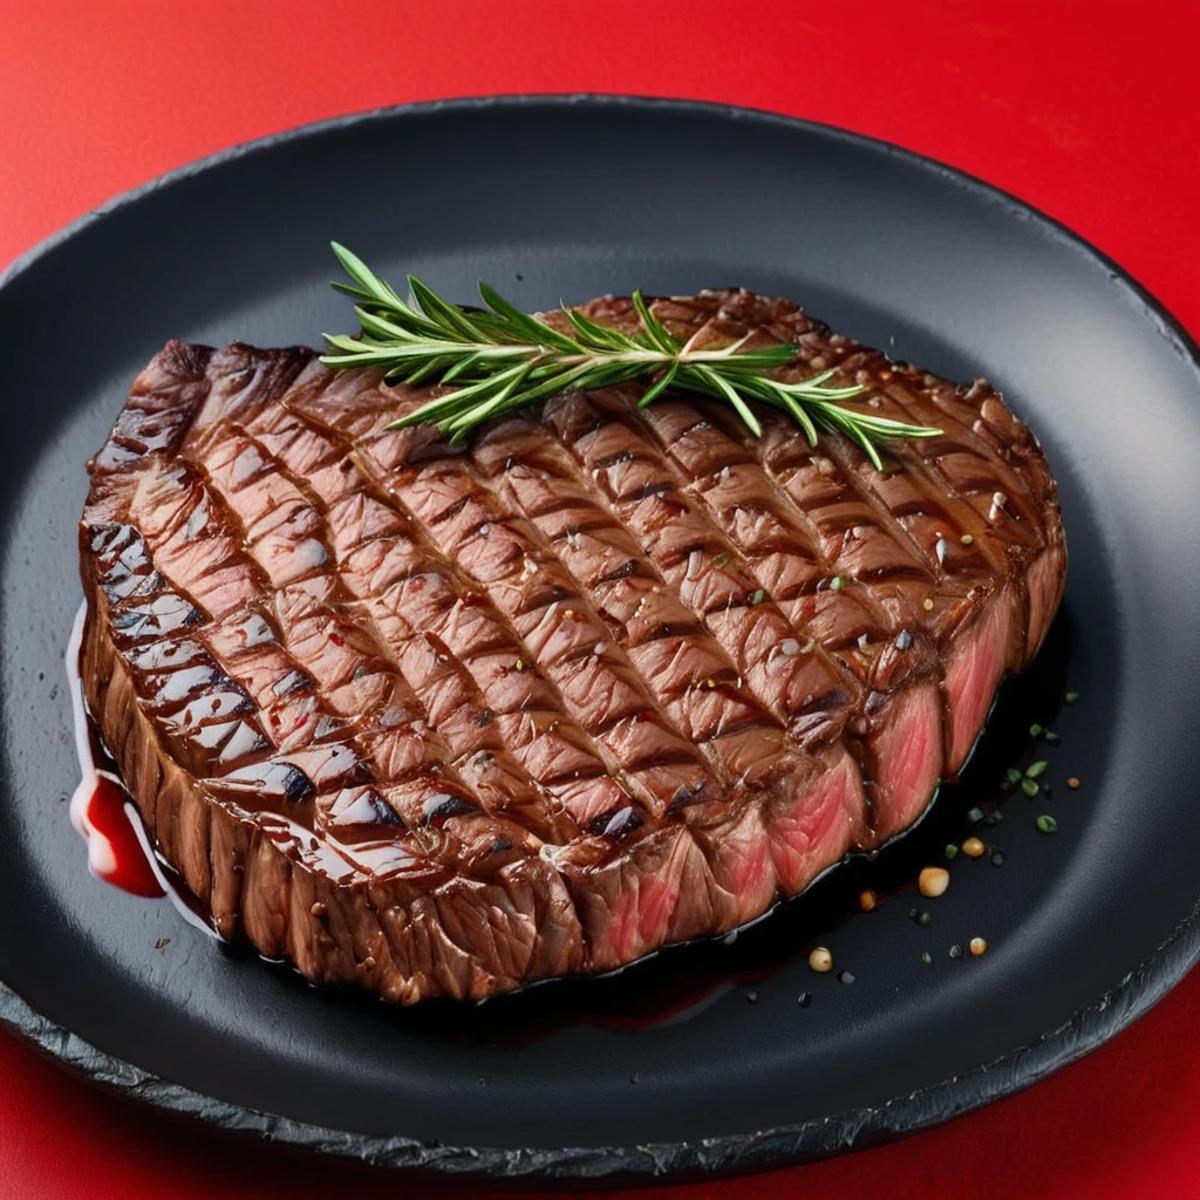 (steak showcase) <lora:32_steak_showcase:1.1>
Red background,
high quality, professional, highres, amazing, dramatic,
(Qui...